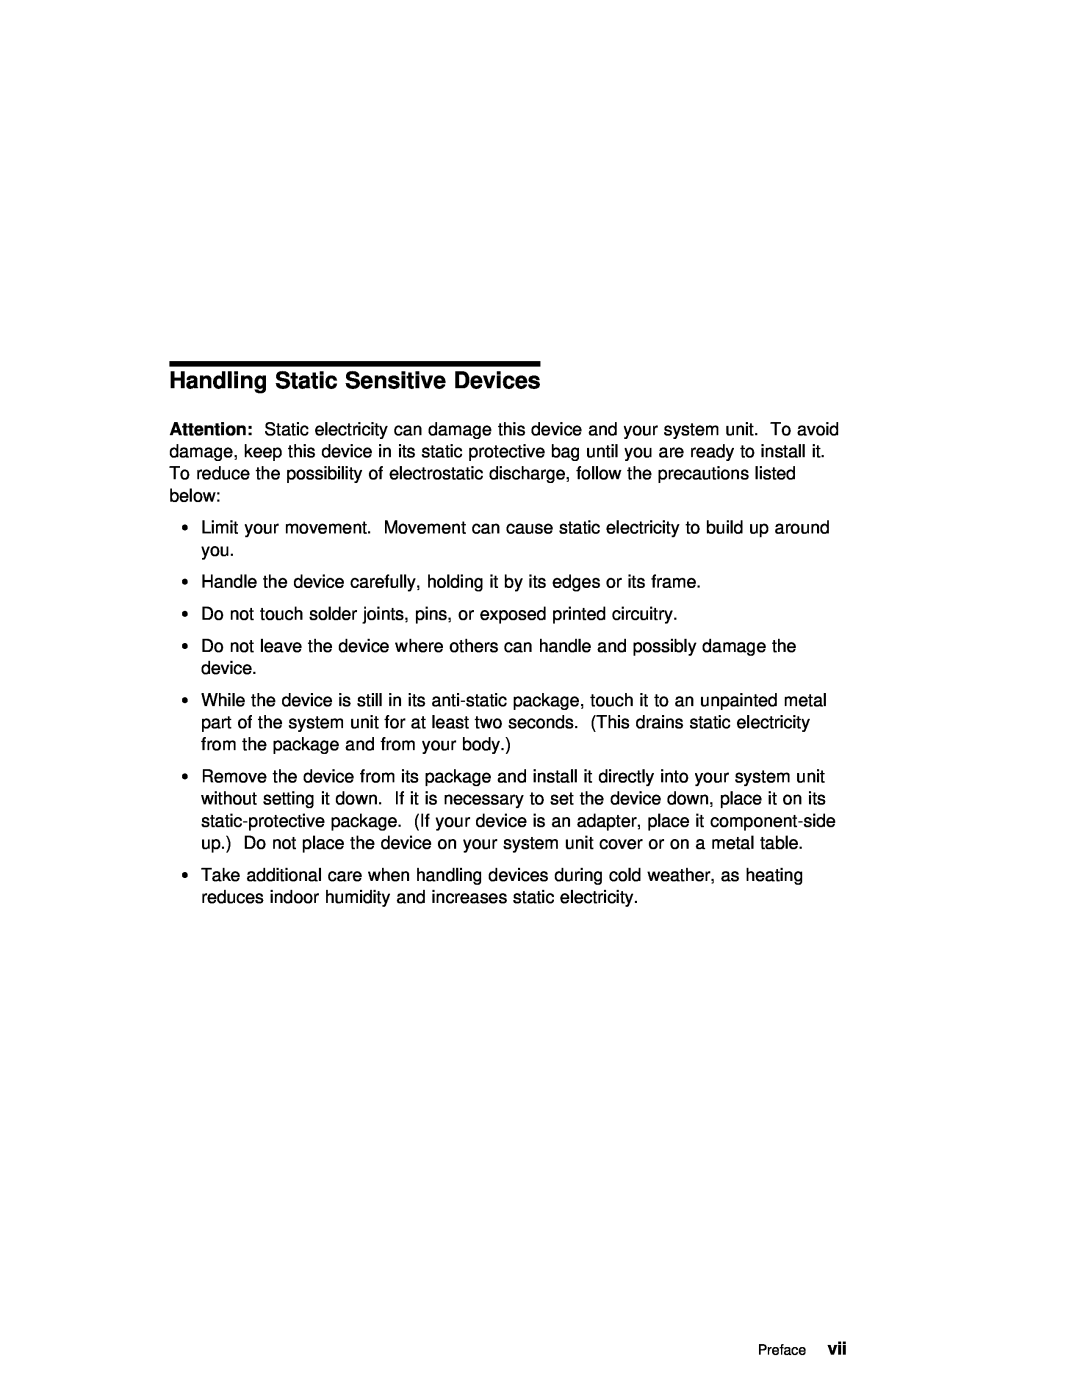 IBM ARTIC960RxD manual Handling Static Sensitive Devices, component, Preface 